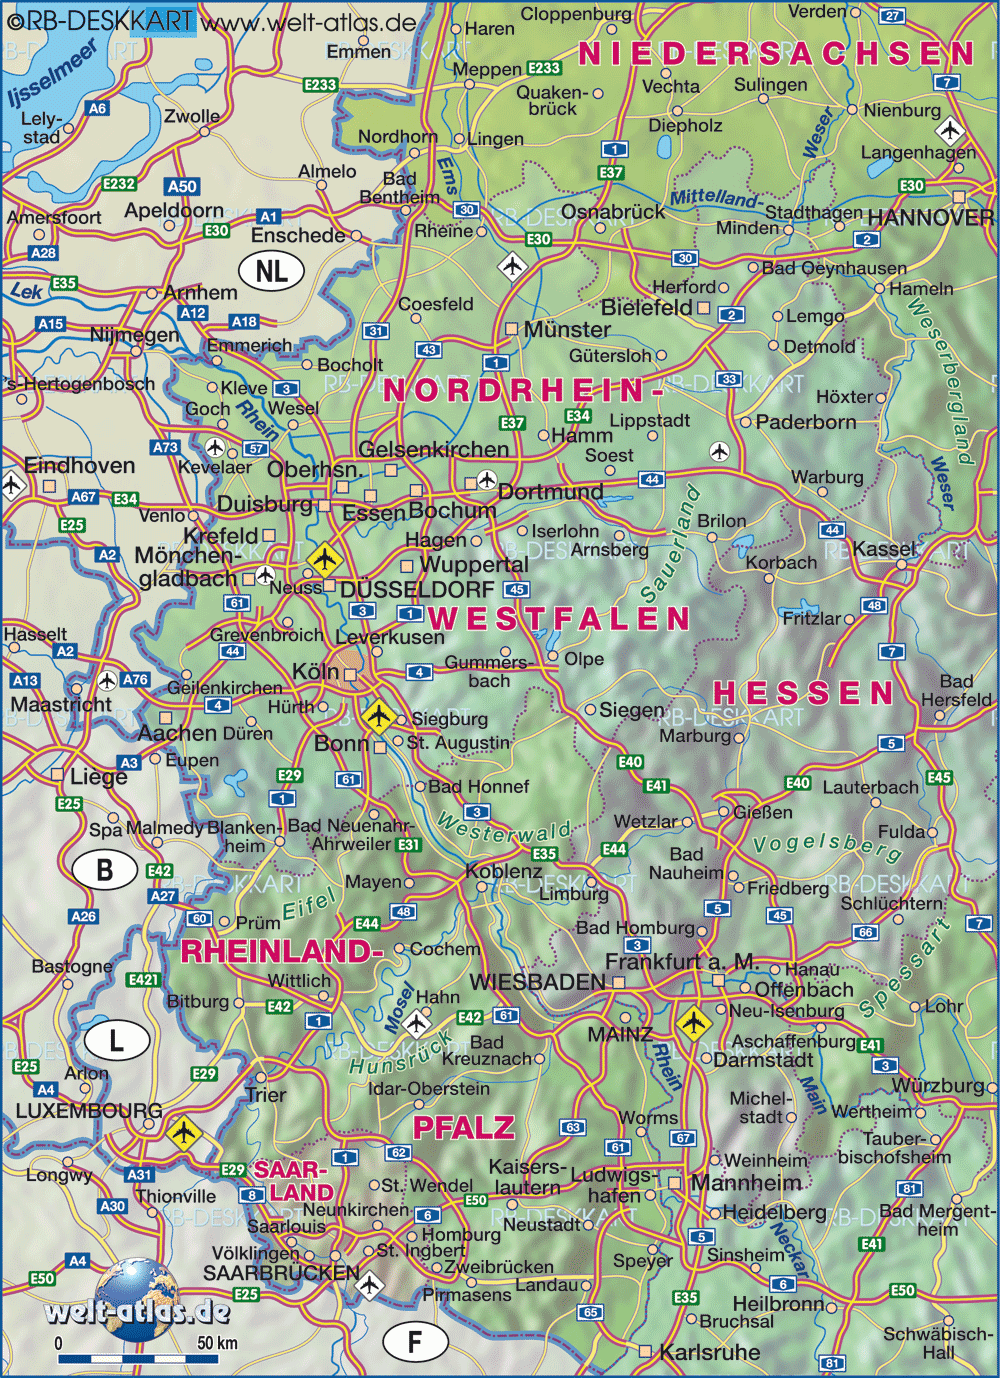 Leverkusen nord westfallen plan